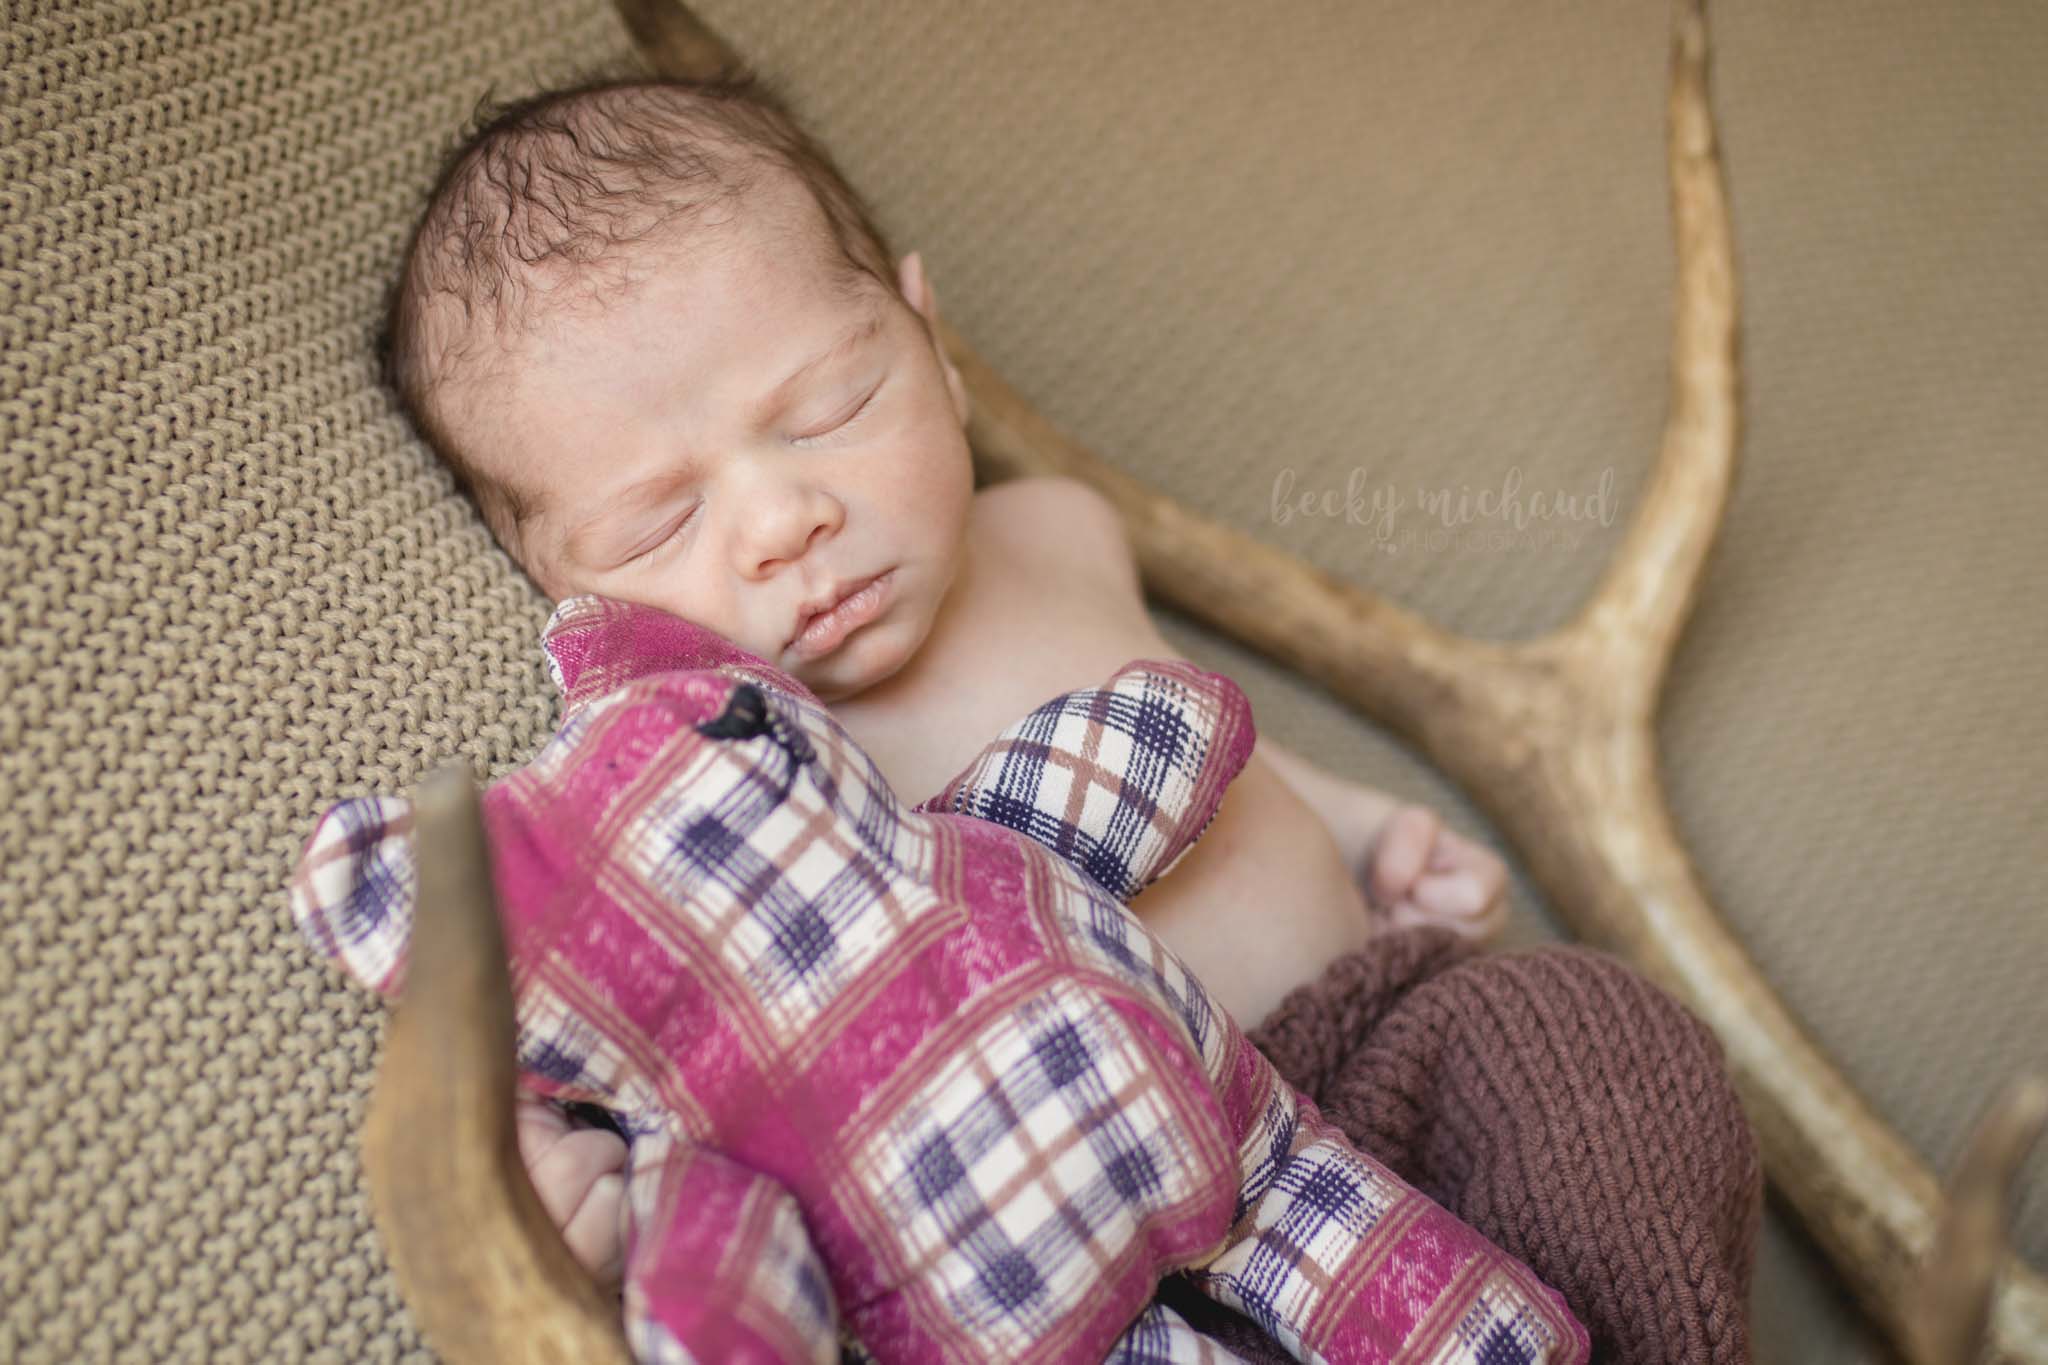 Becky Michaud Photography - Berthoud Colorado - Newborn Photographer